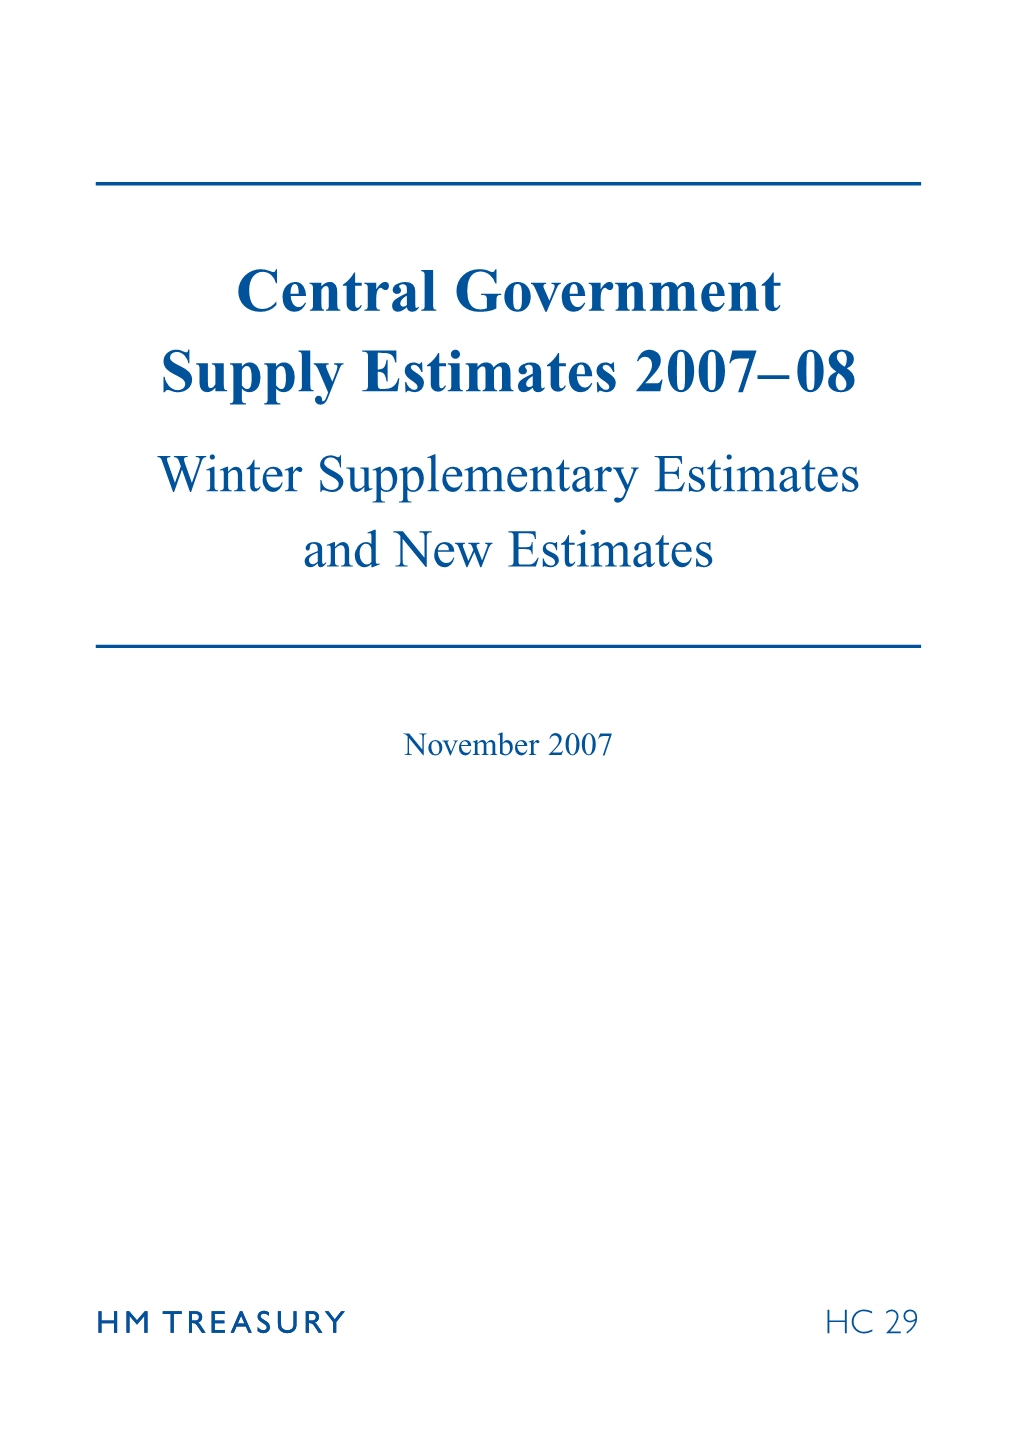 Central Government Supply Estimates 2007Â